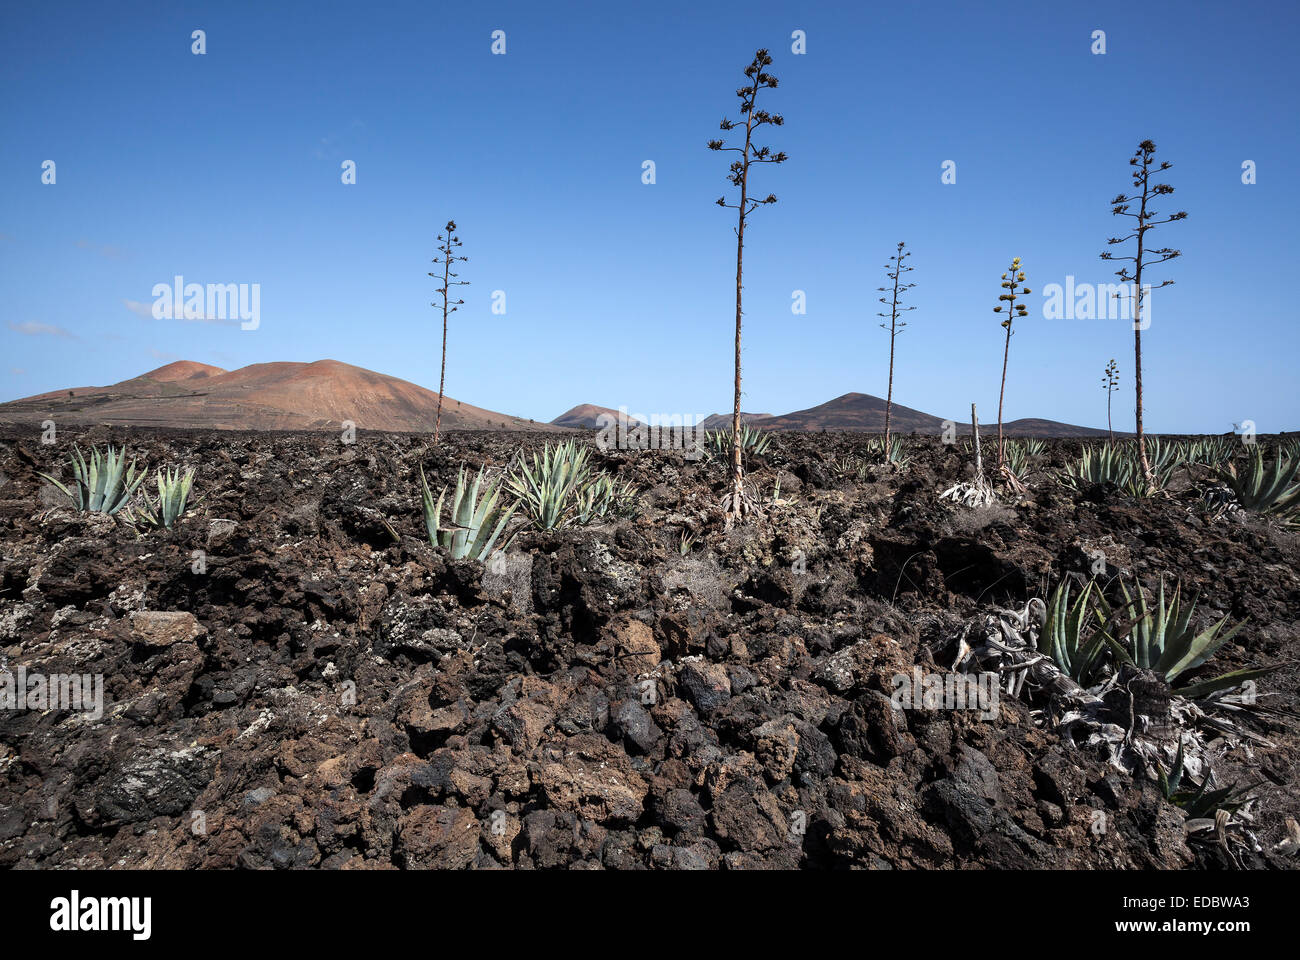 Agaves (Agave) in the lava field near Mancha Blanca, Lanzarote, Canary Islands, Spain Stock Photo